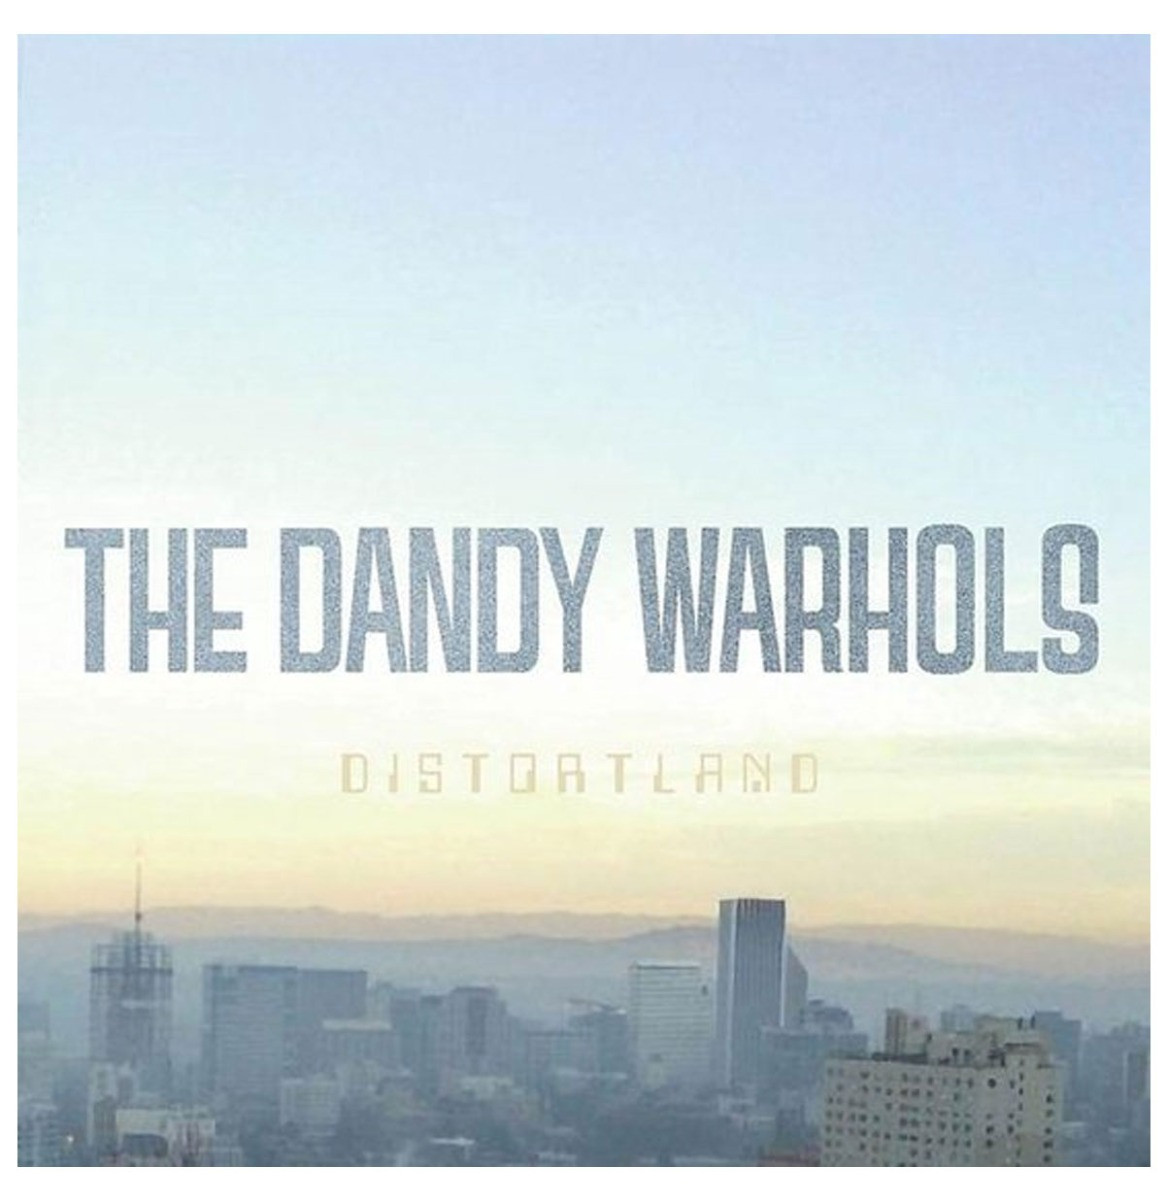 The Dandy Warhols - Distortland LP